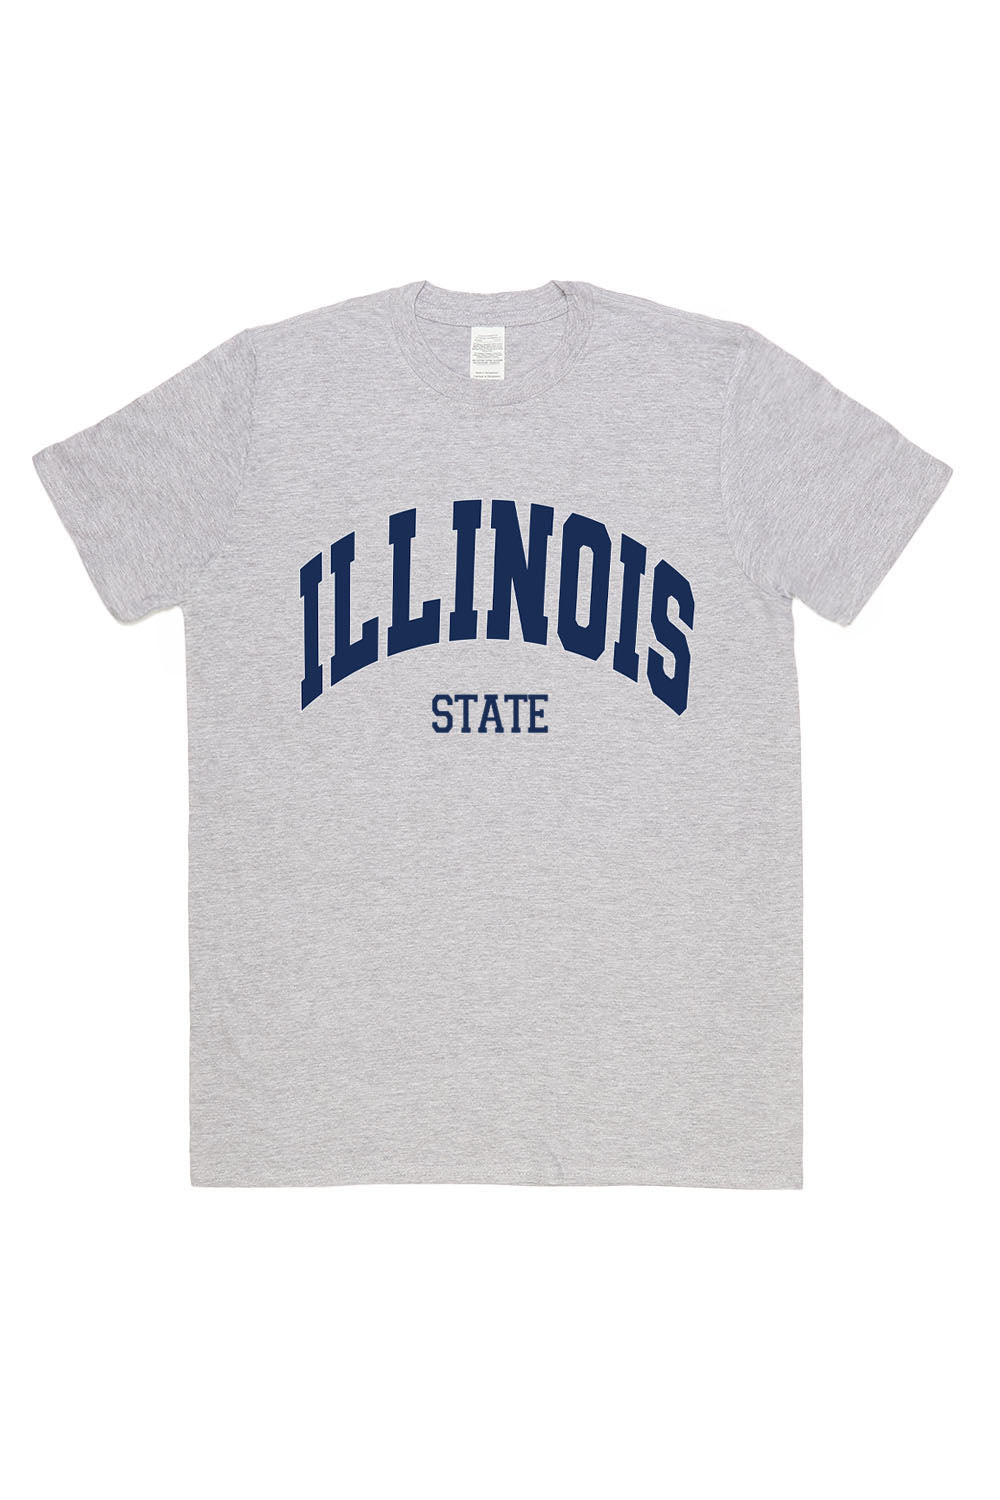 Illinois T-Shirt in Ash Grey (Custom Packs)